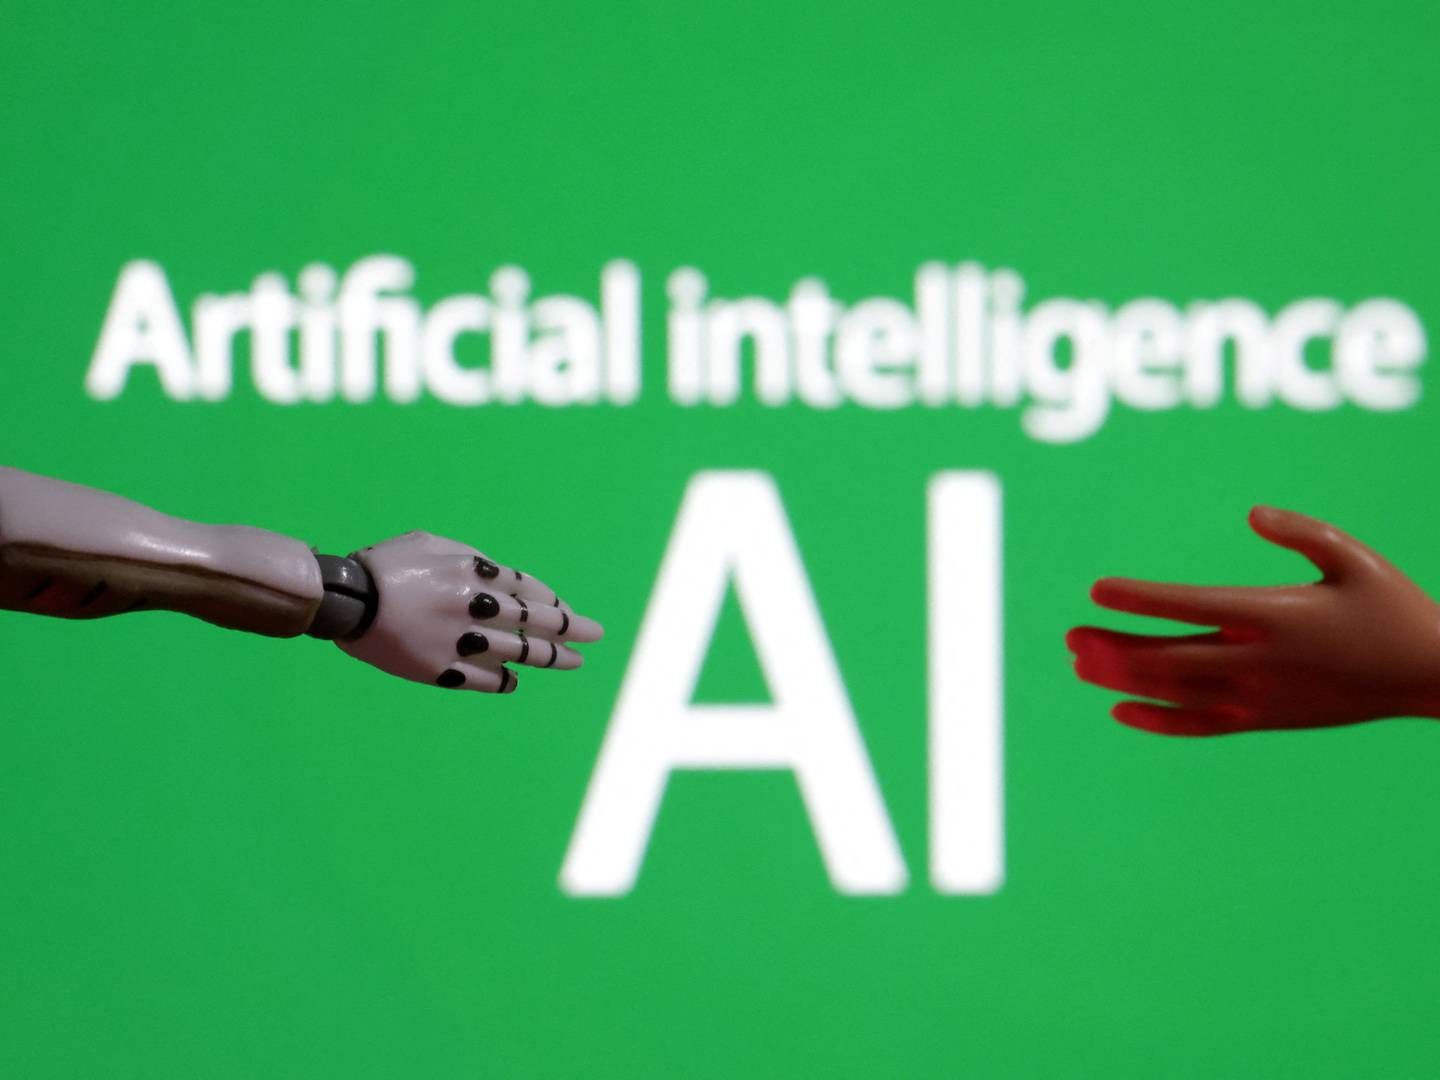 Kunstig intelligens, ofte forkortet AI, skyller ind over advokatbranchen. | Foto: Dado Ruvic